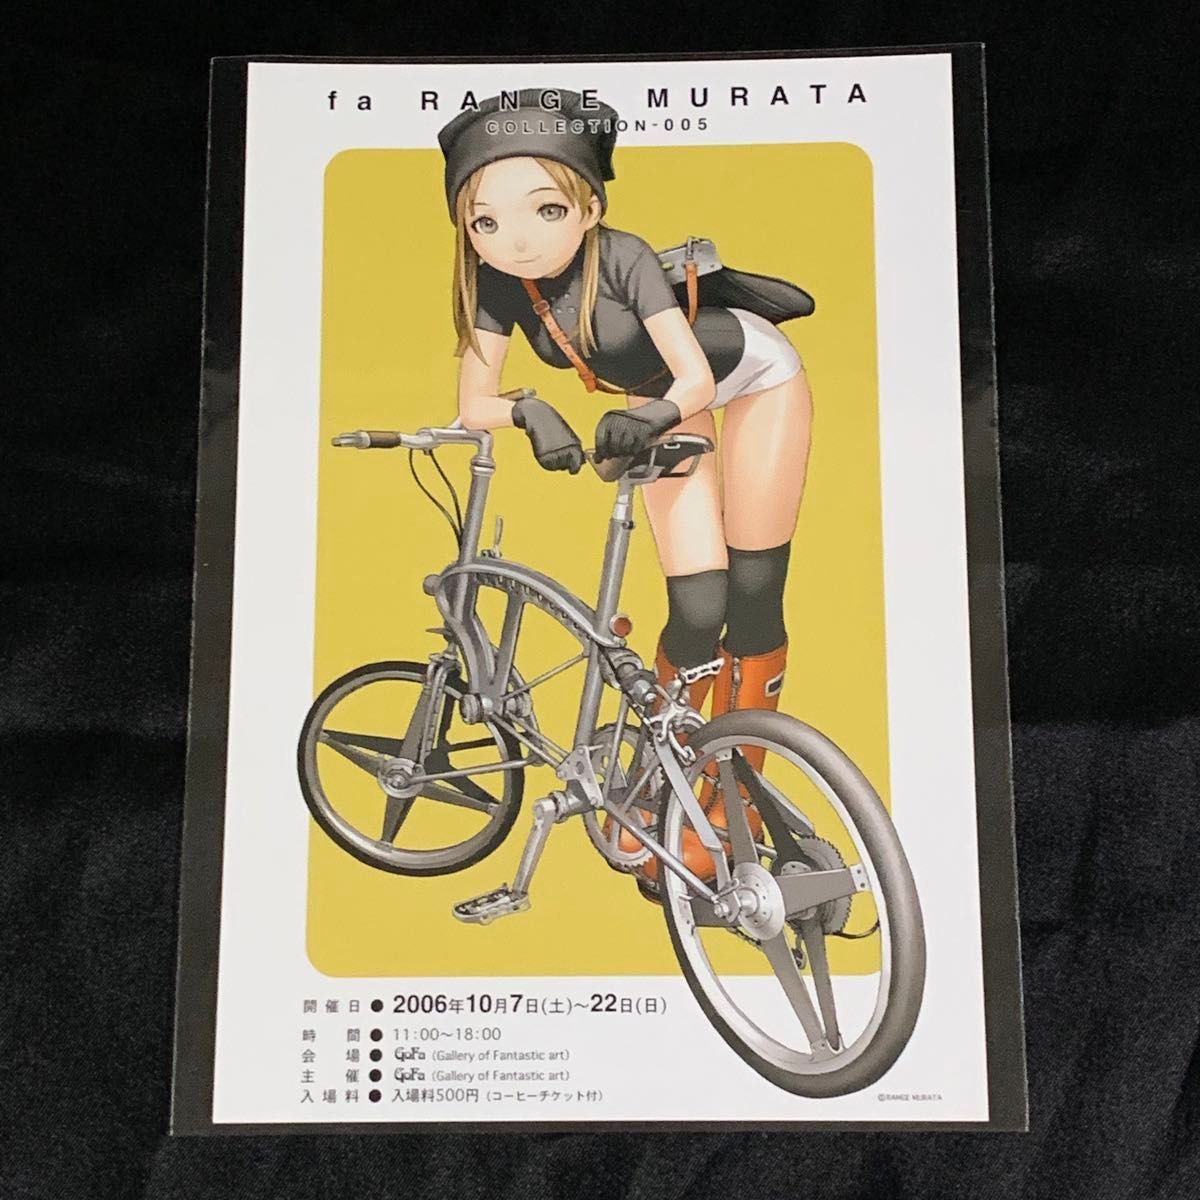 fa RANGE MURATA カタログ ポスター + ポストカードセット 村田蓮爾 作品集 イラスト グッズ